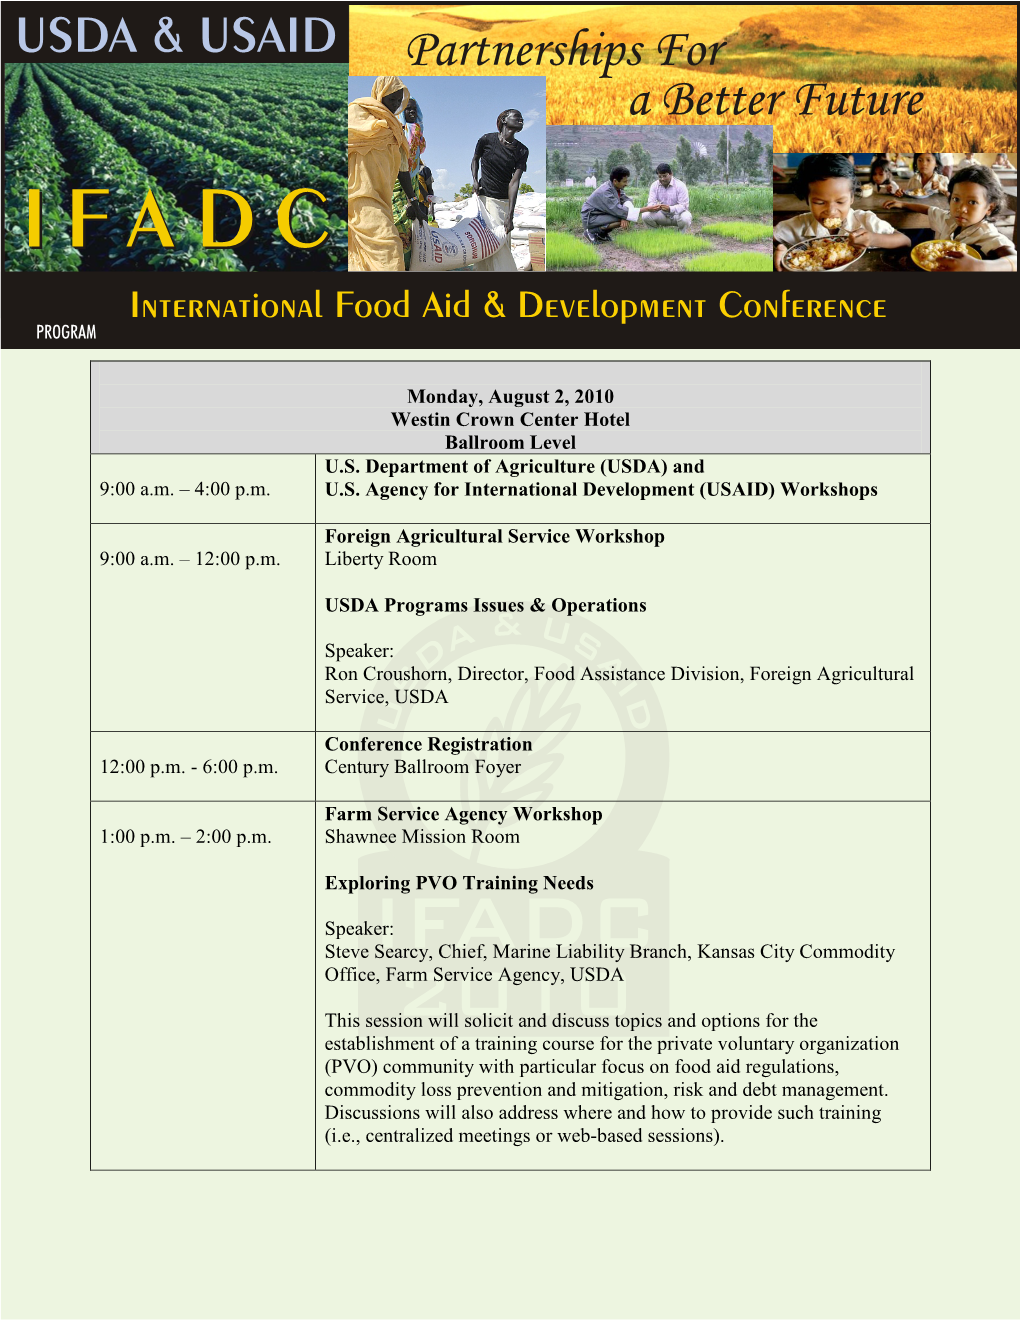 IFADC Program Information